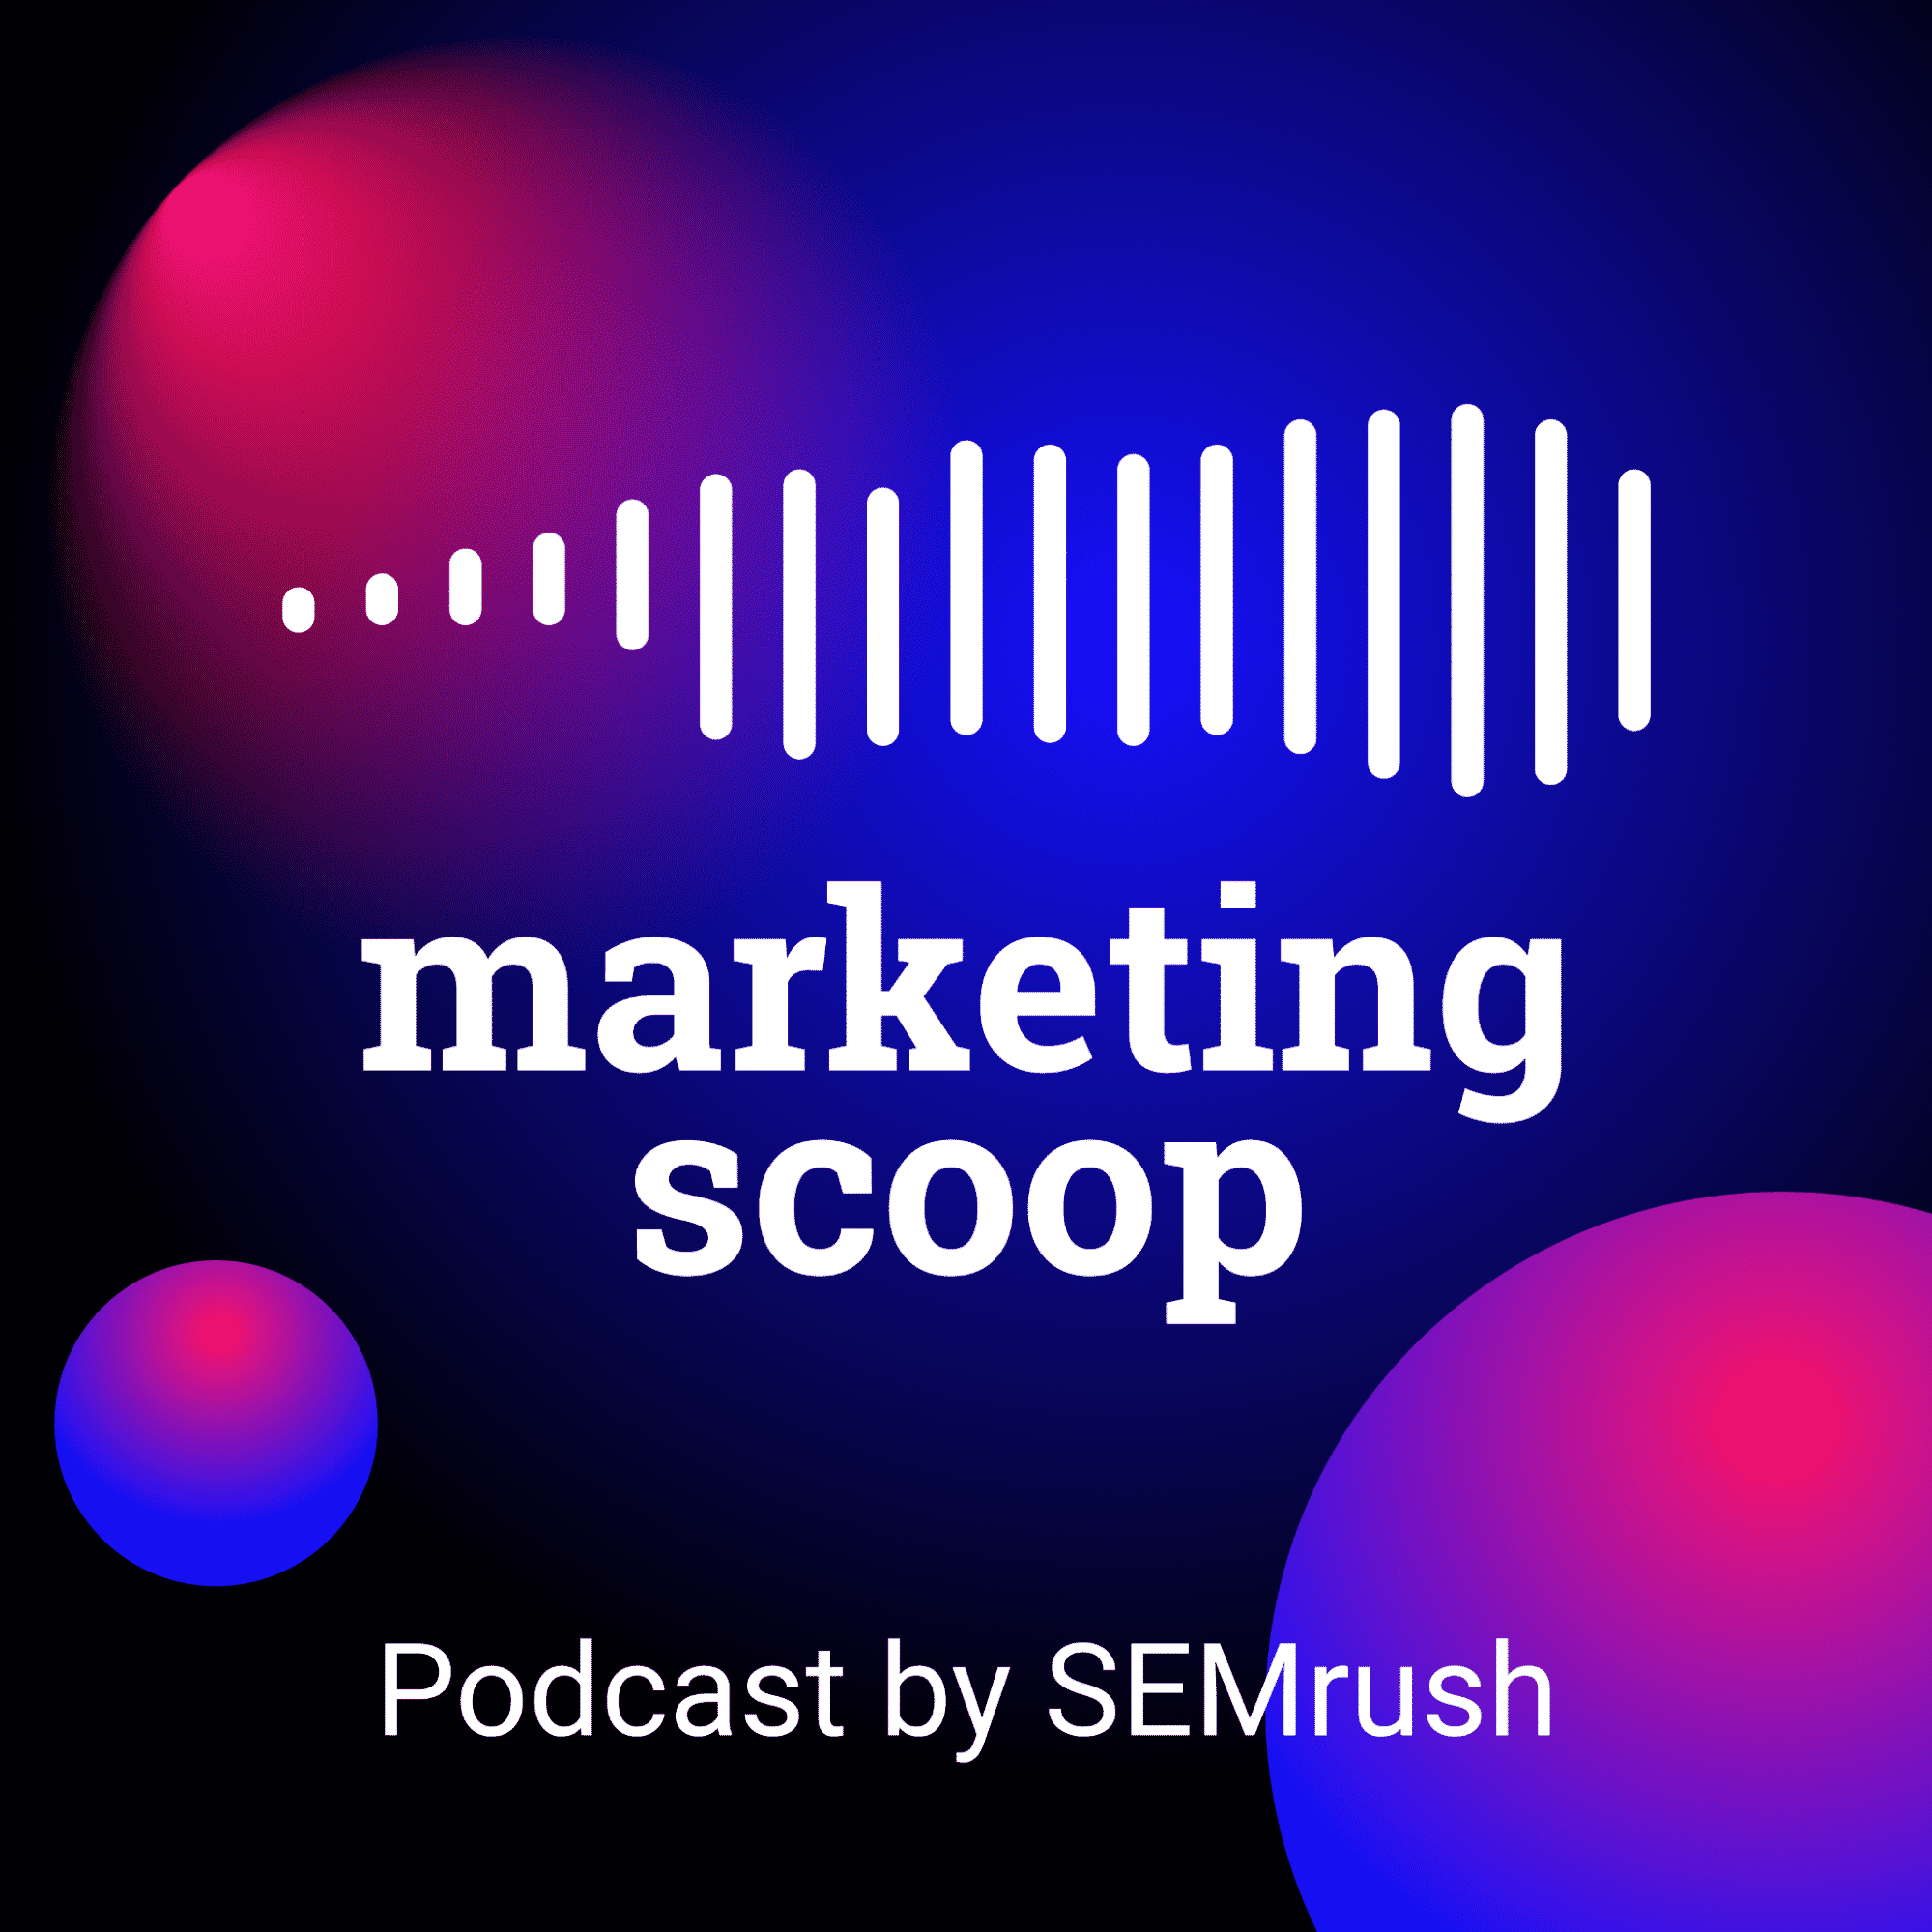 Marketing-Scoop - Growth Marketing Podcast